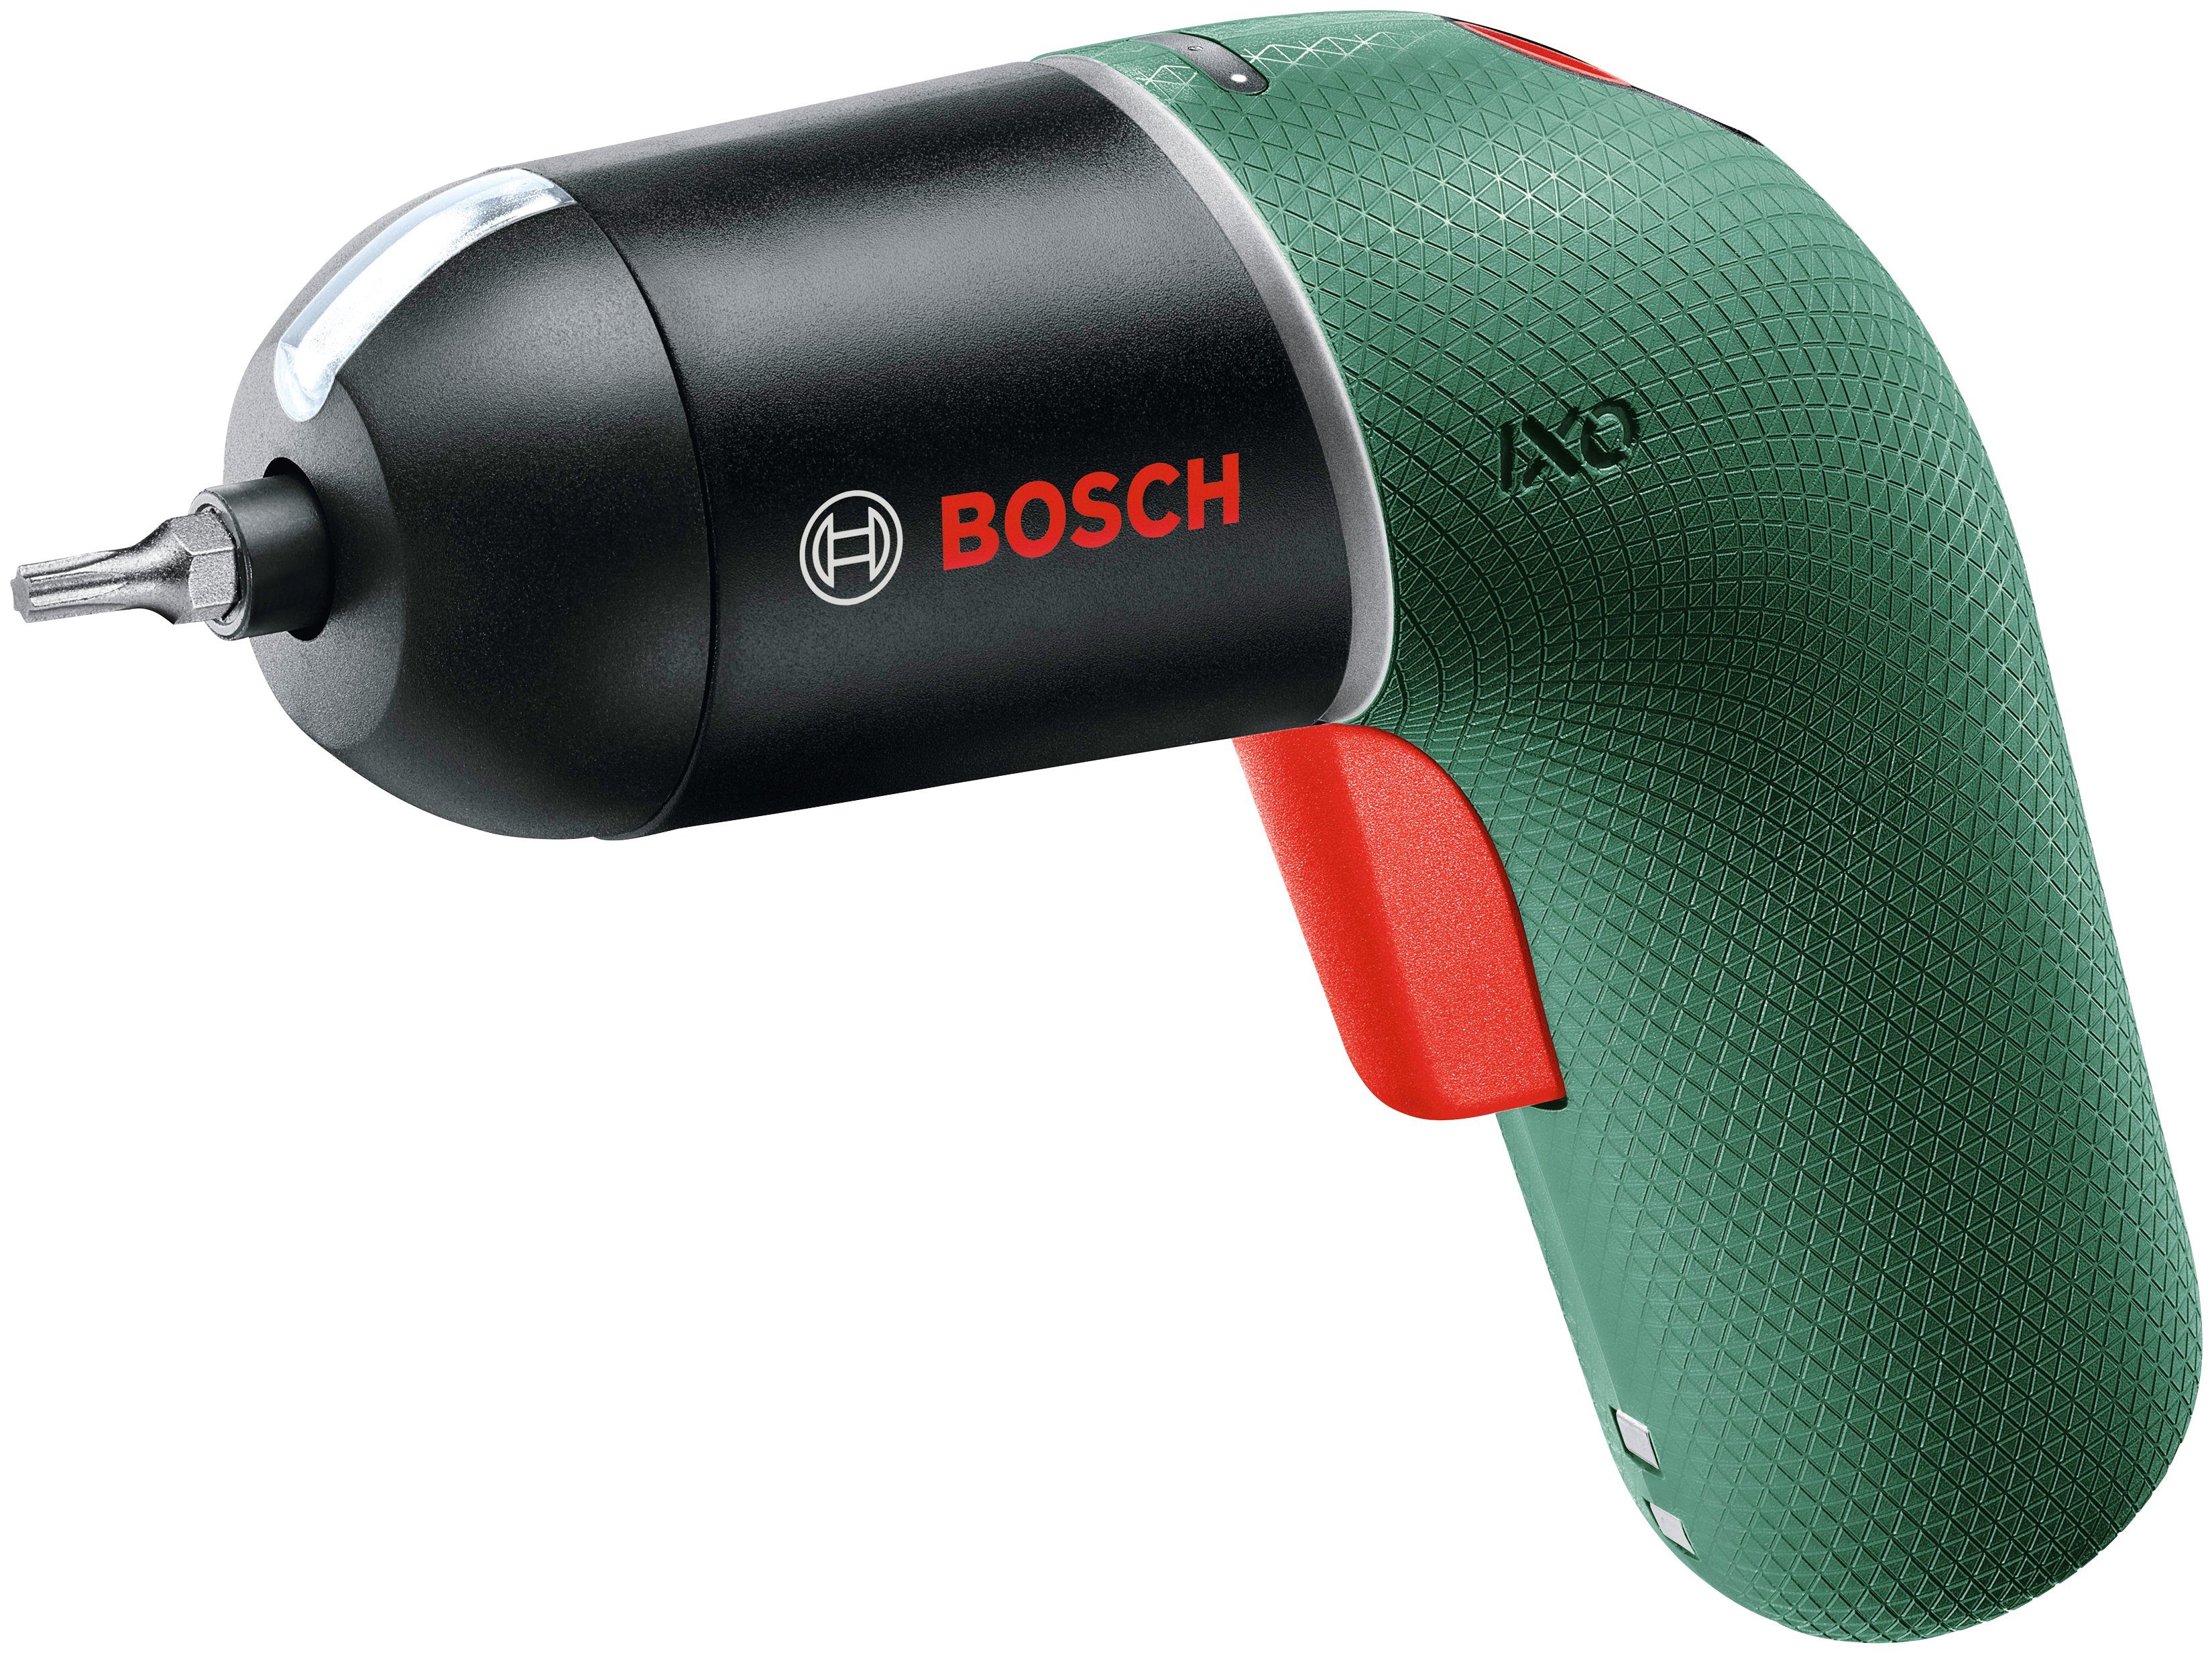 Bosch Home & Garden Akku-Schrauber Akku 6 und Classic, IXO 4,5 215 U/min, inklusive Nm, USB-Ladekabel